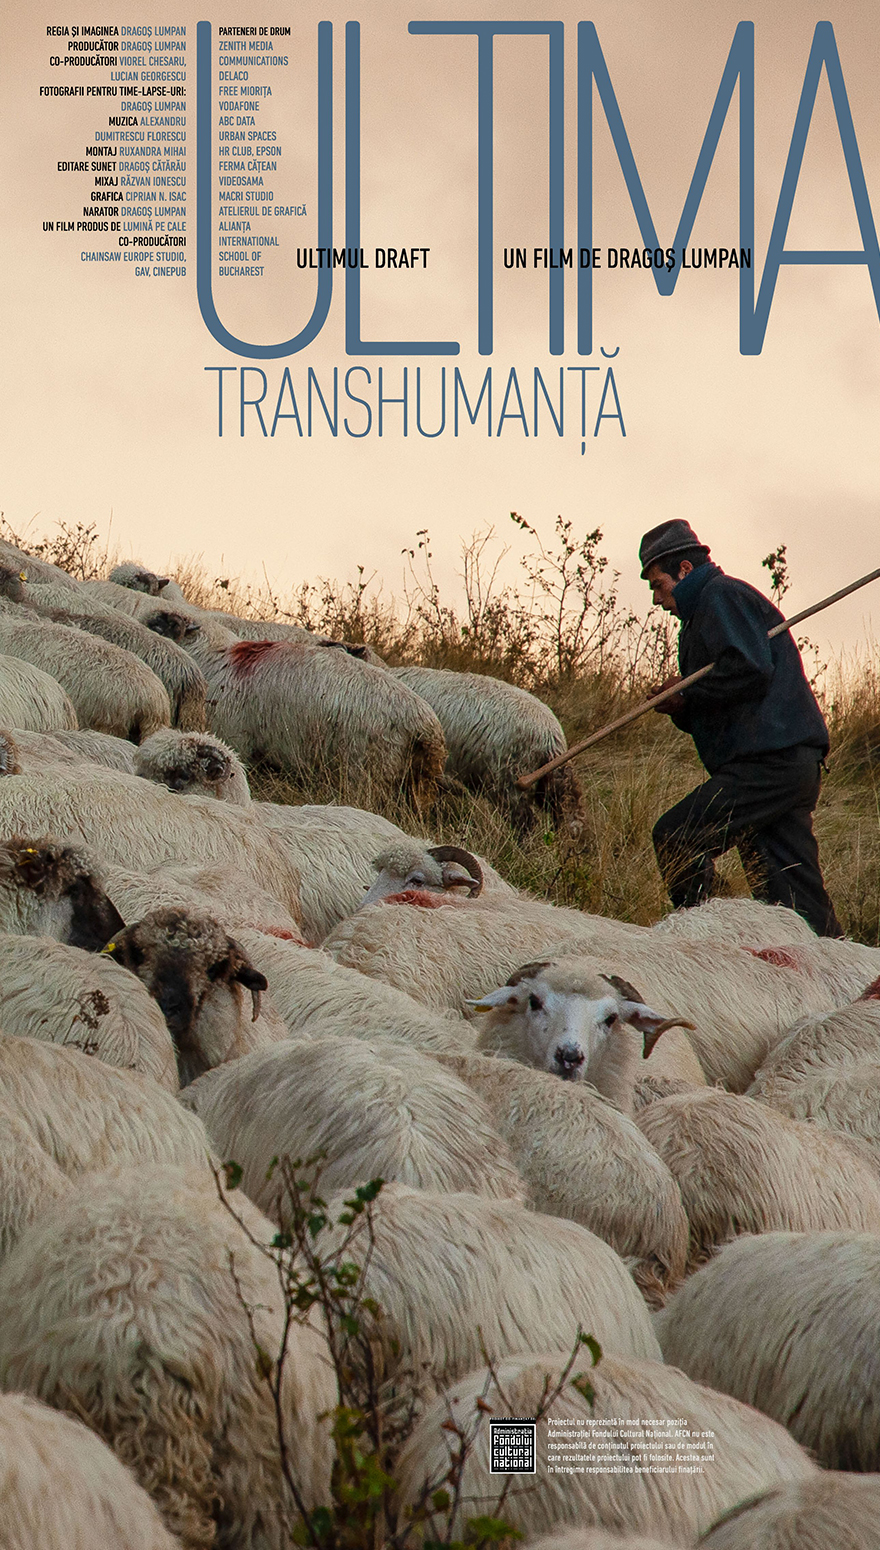 The Last Transhumance - documentary by Dragos Lumpan